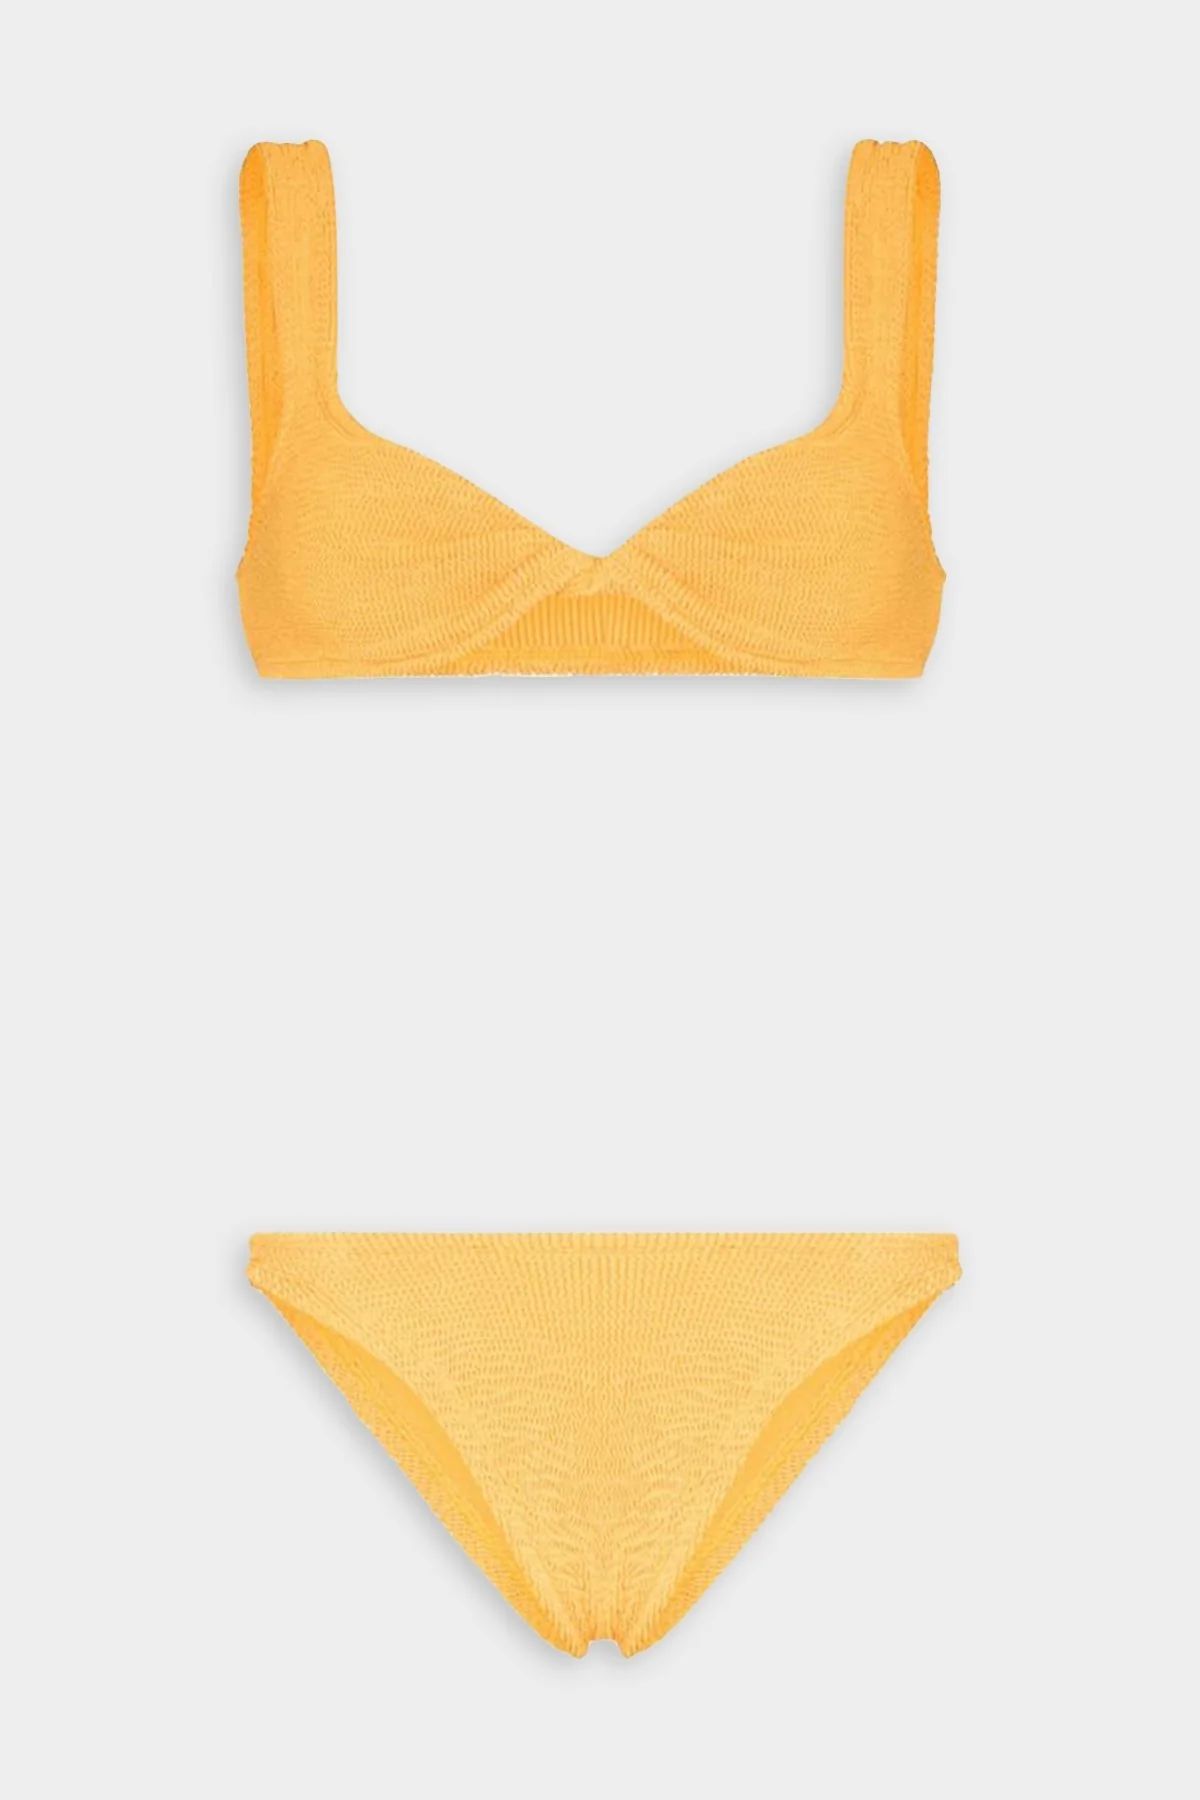 Juno Bikini in Mango Sorbet | Shop Olivia